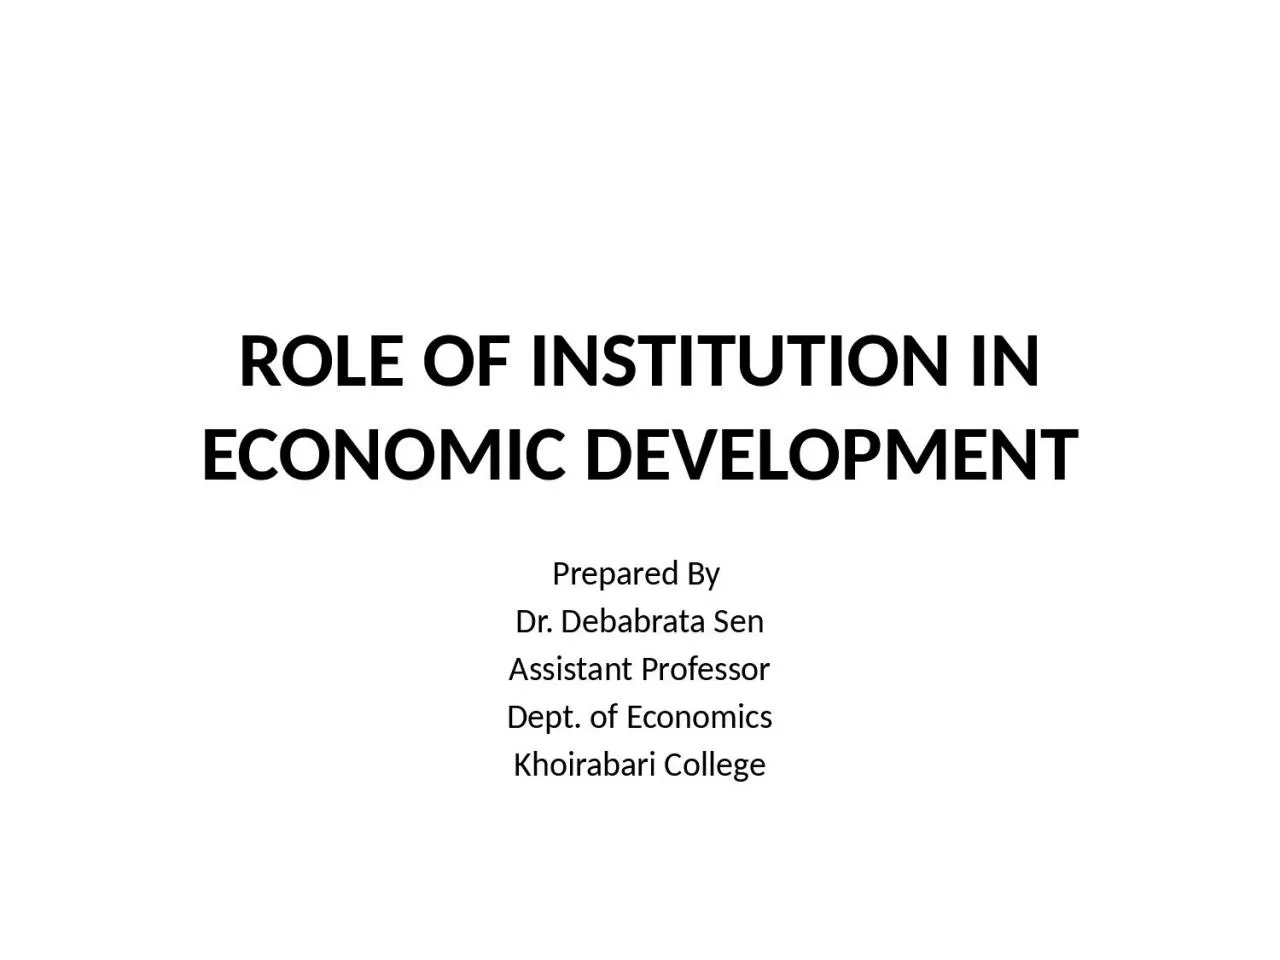 ROLE OF INSTITUTION IN ECONOMIC DEVELOPMENT